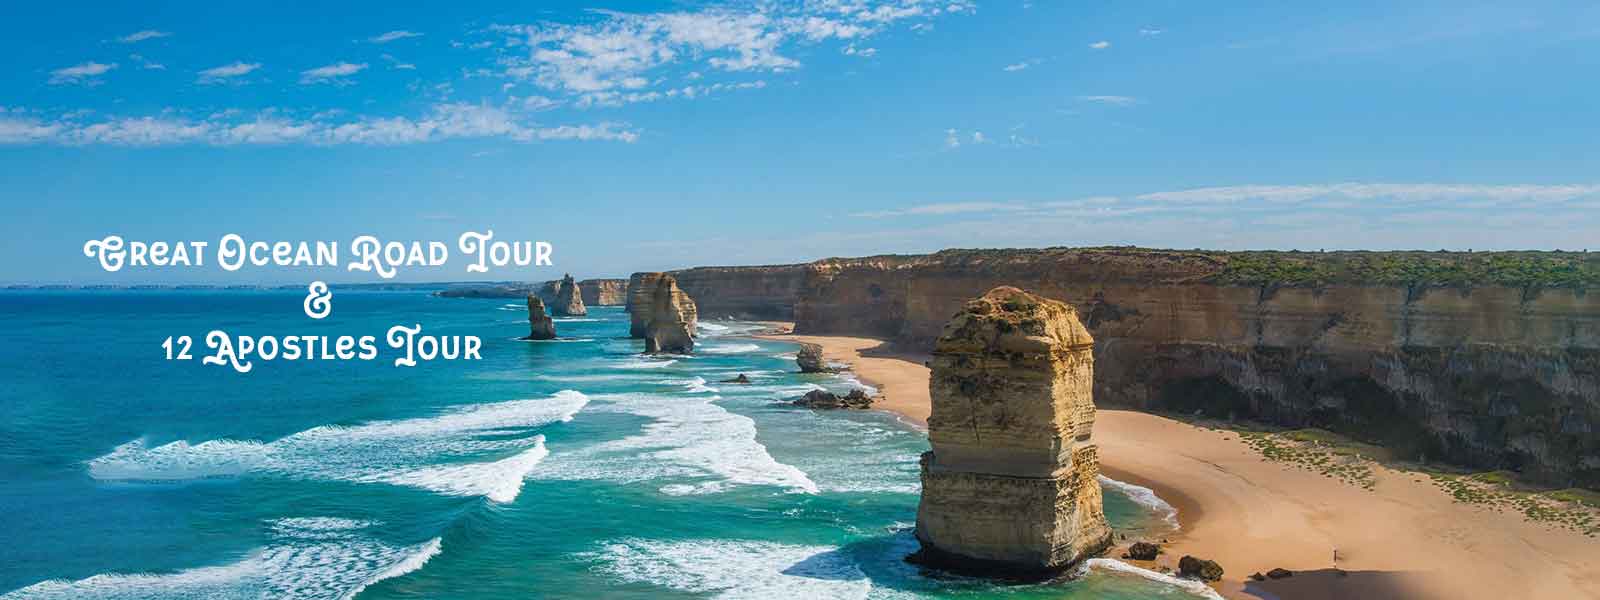 Great Ocean Road 12 Apostles Tour | Great Ocean Road And 12 Apostles Tour | Executive Cars Melbourne